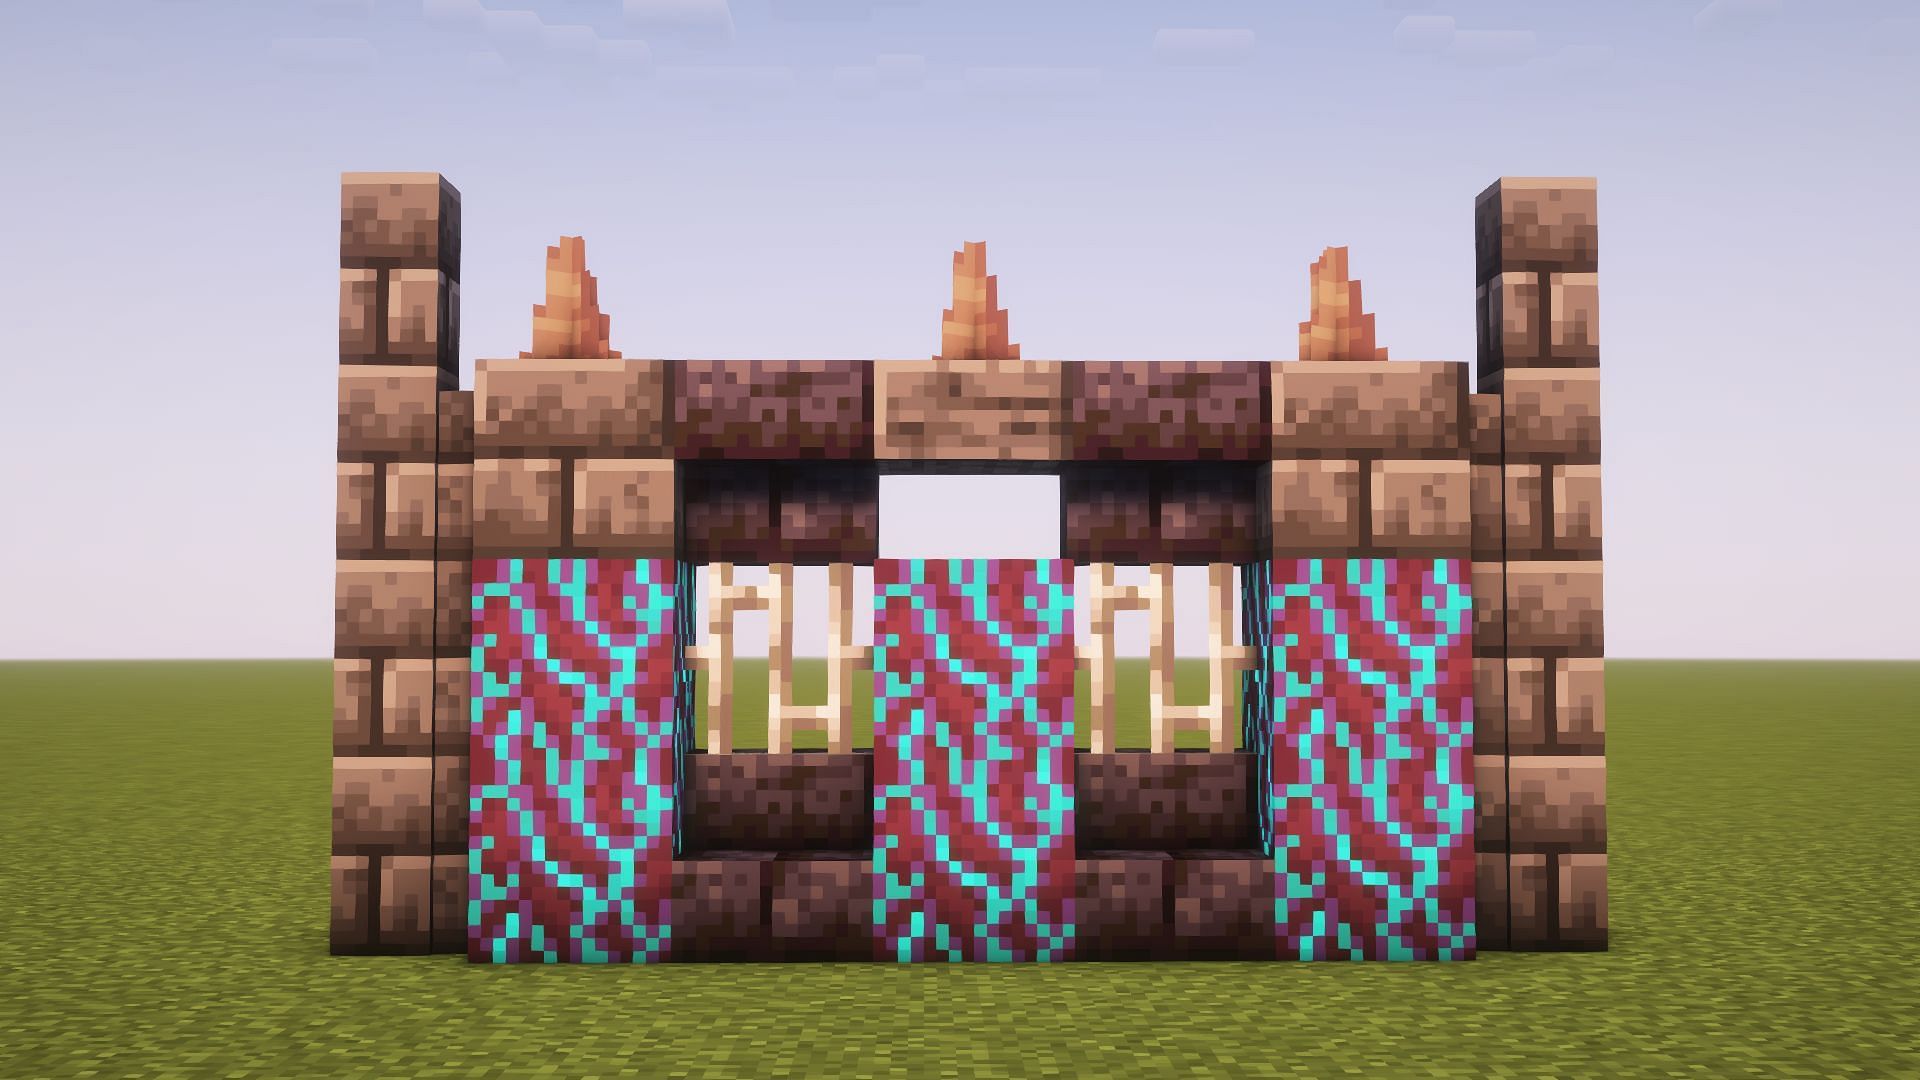 Evil-looking wall in Minecraft (Image via Mojang)